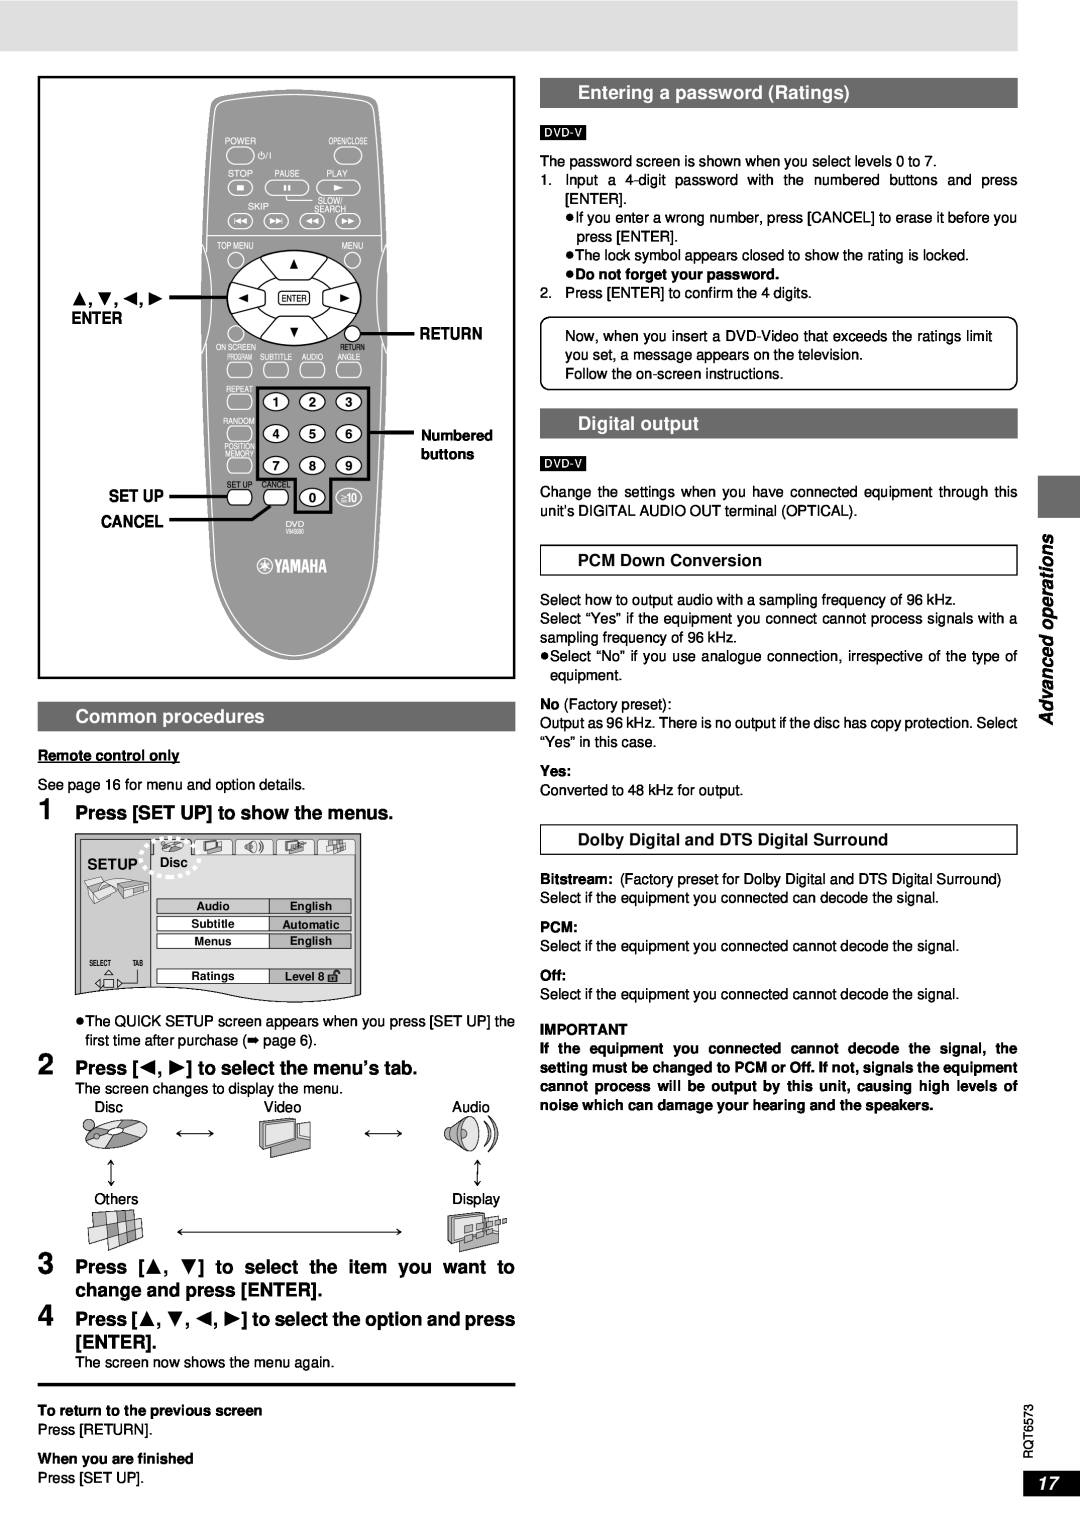 Yamaha AVX-S80 Common procedures, Press SET UP to show the menus, Press 2, 1 to select the menu’s tab, Digital output 